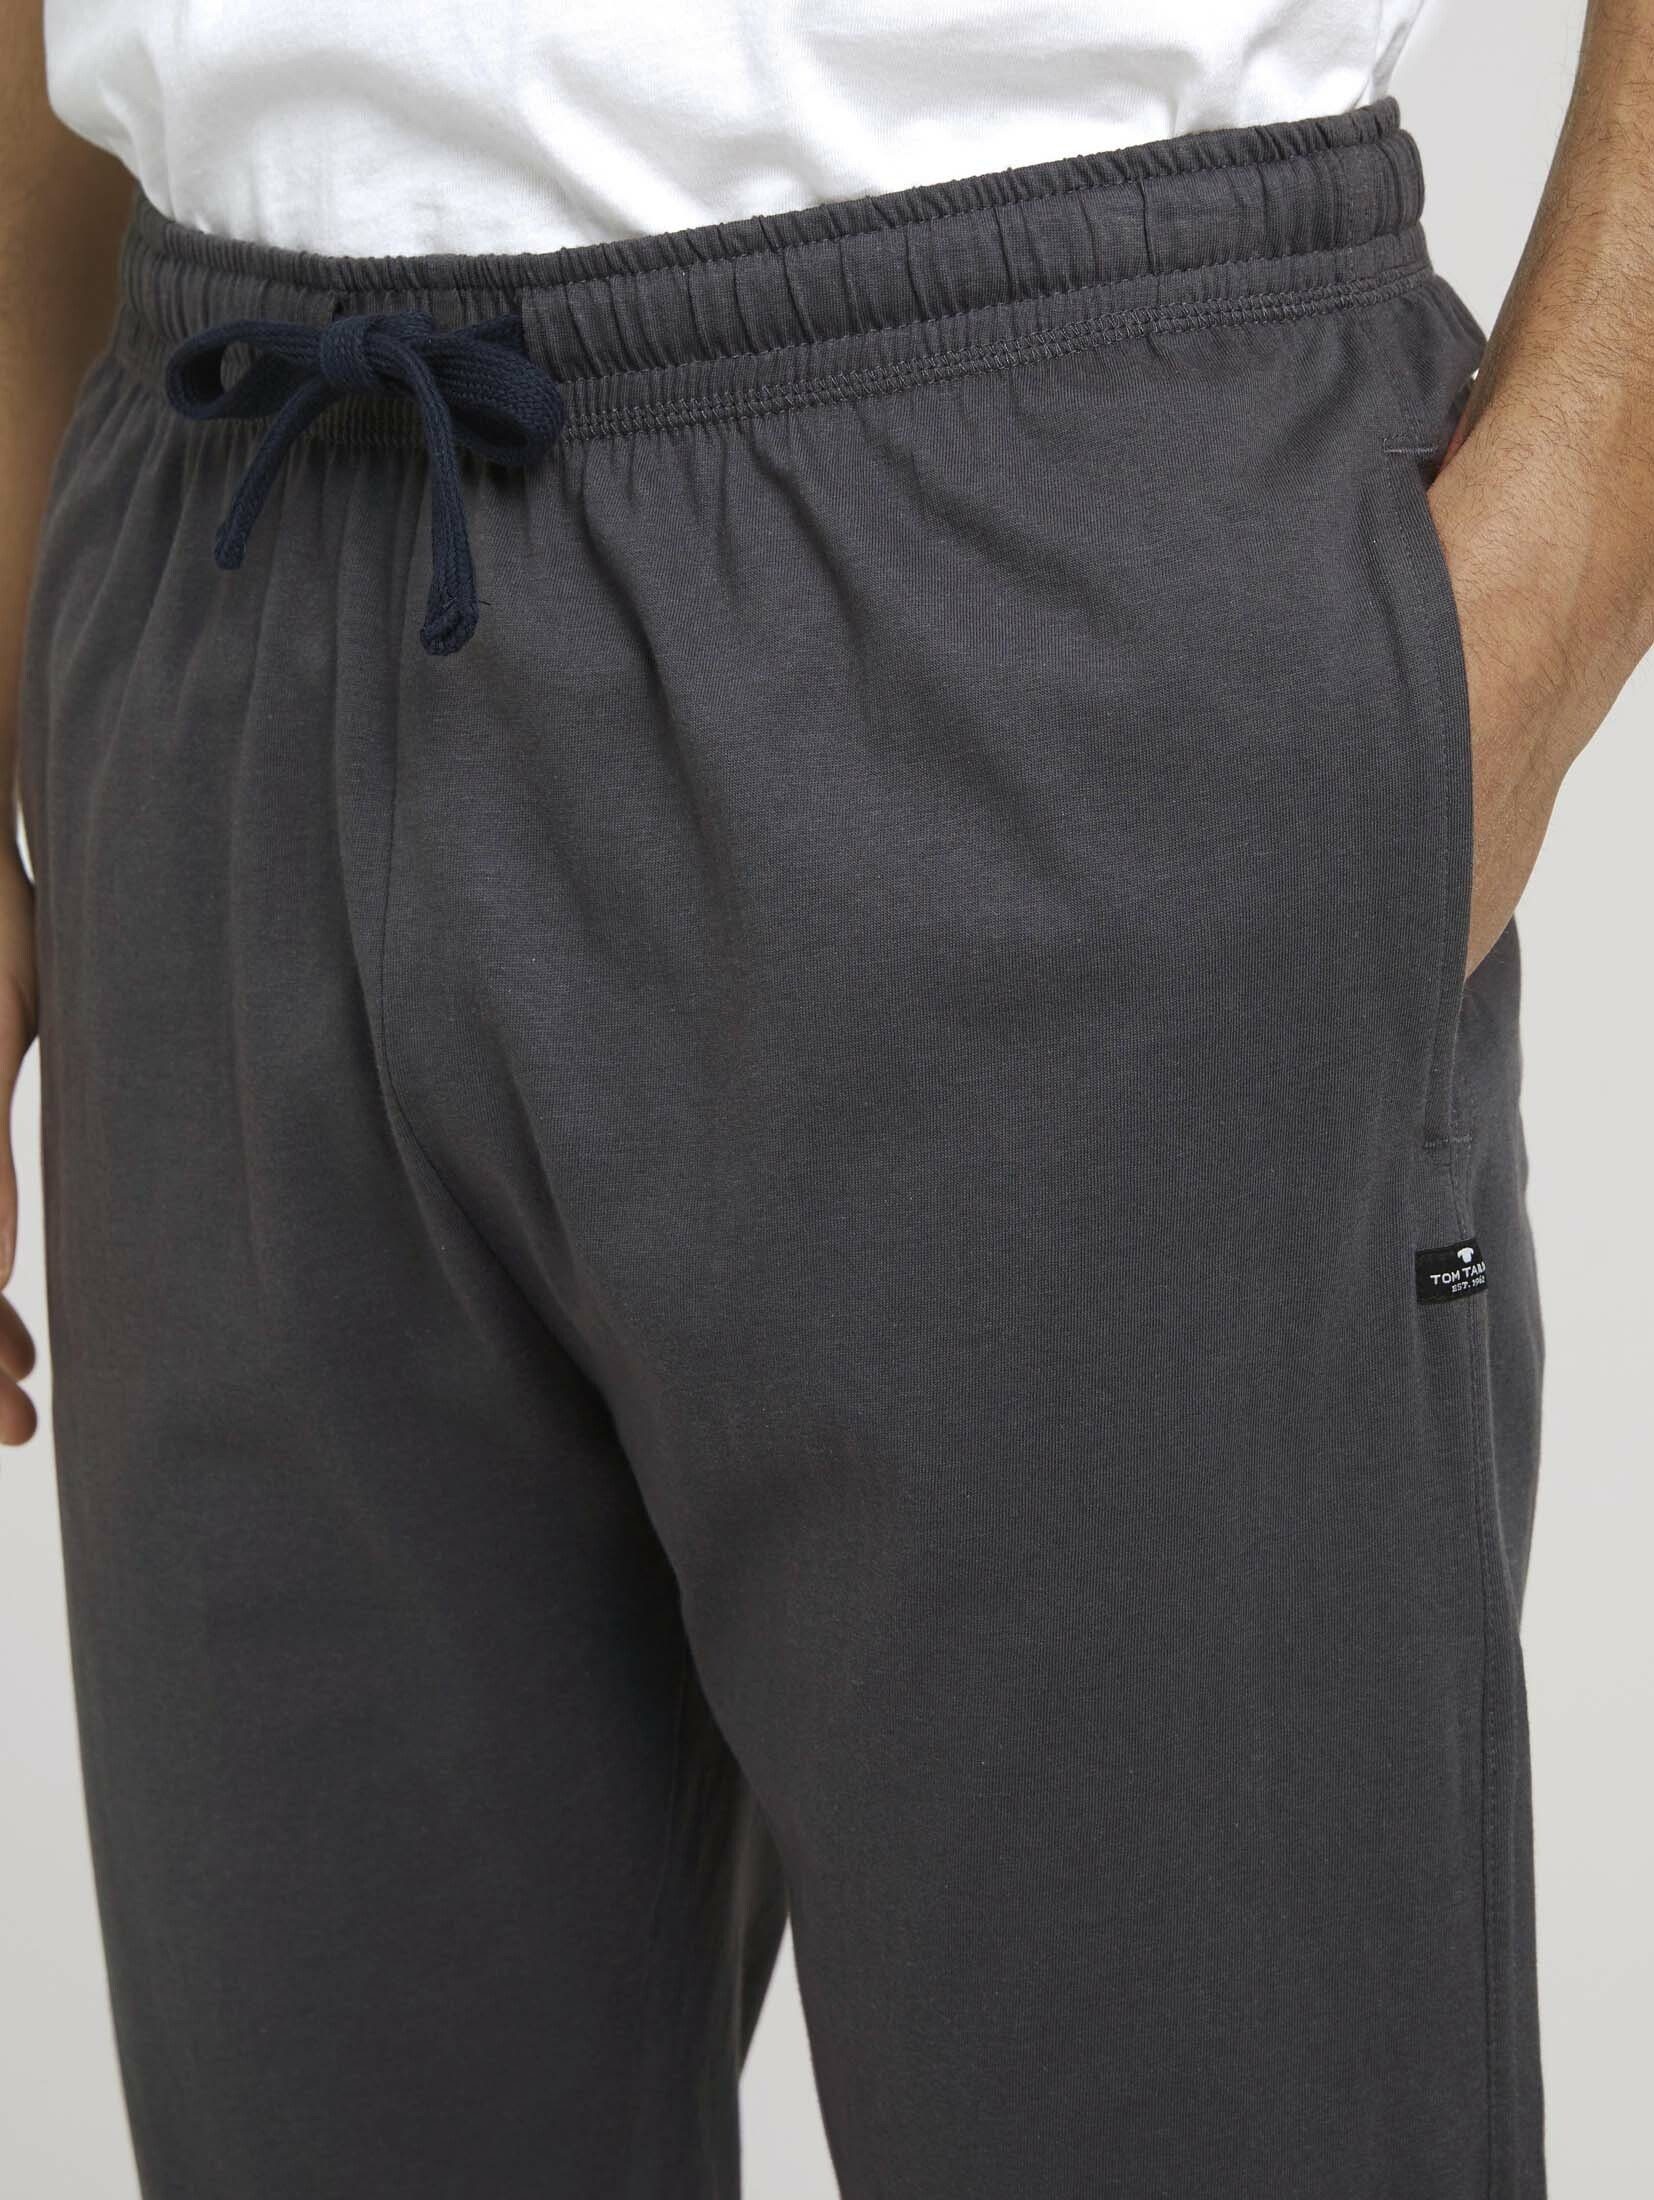 Hose TOM Pyjama grey-dark-solid Schlafhose TAILOR